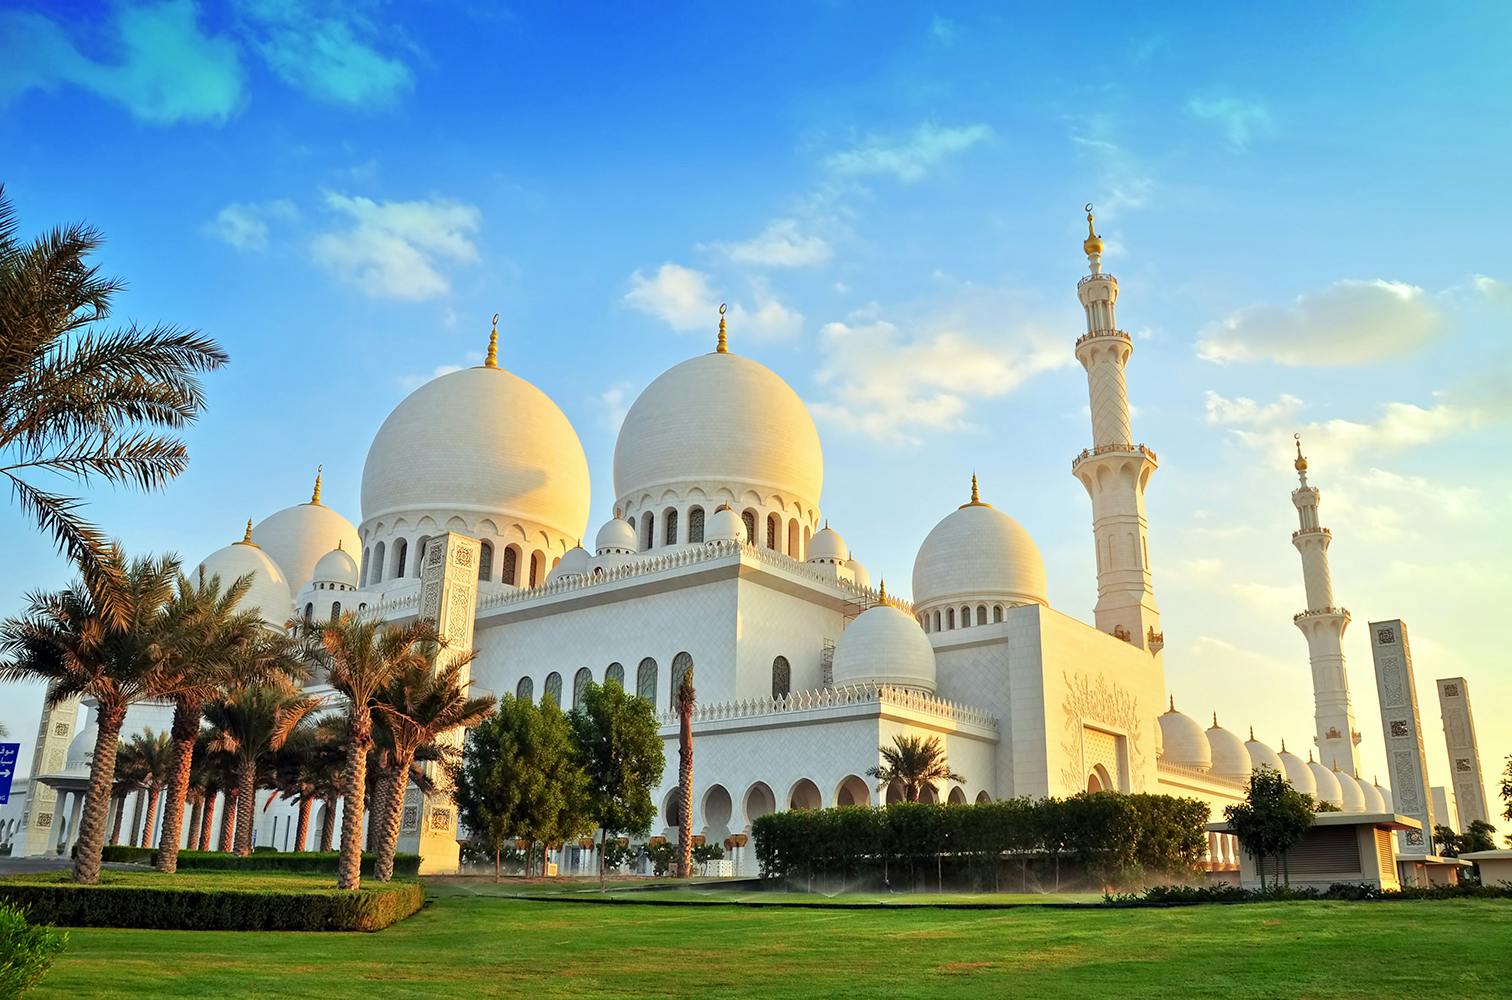 Polish tour of Abu Dhabi from Ras Al Khaimah Musement